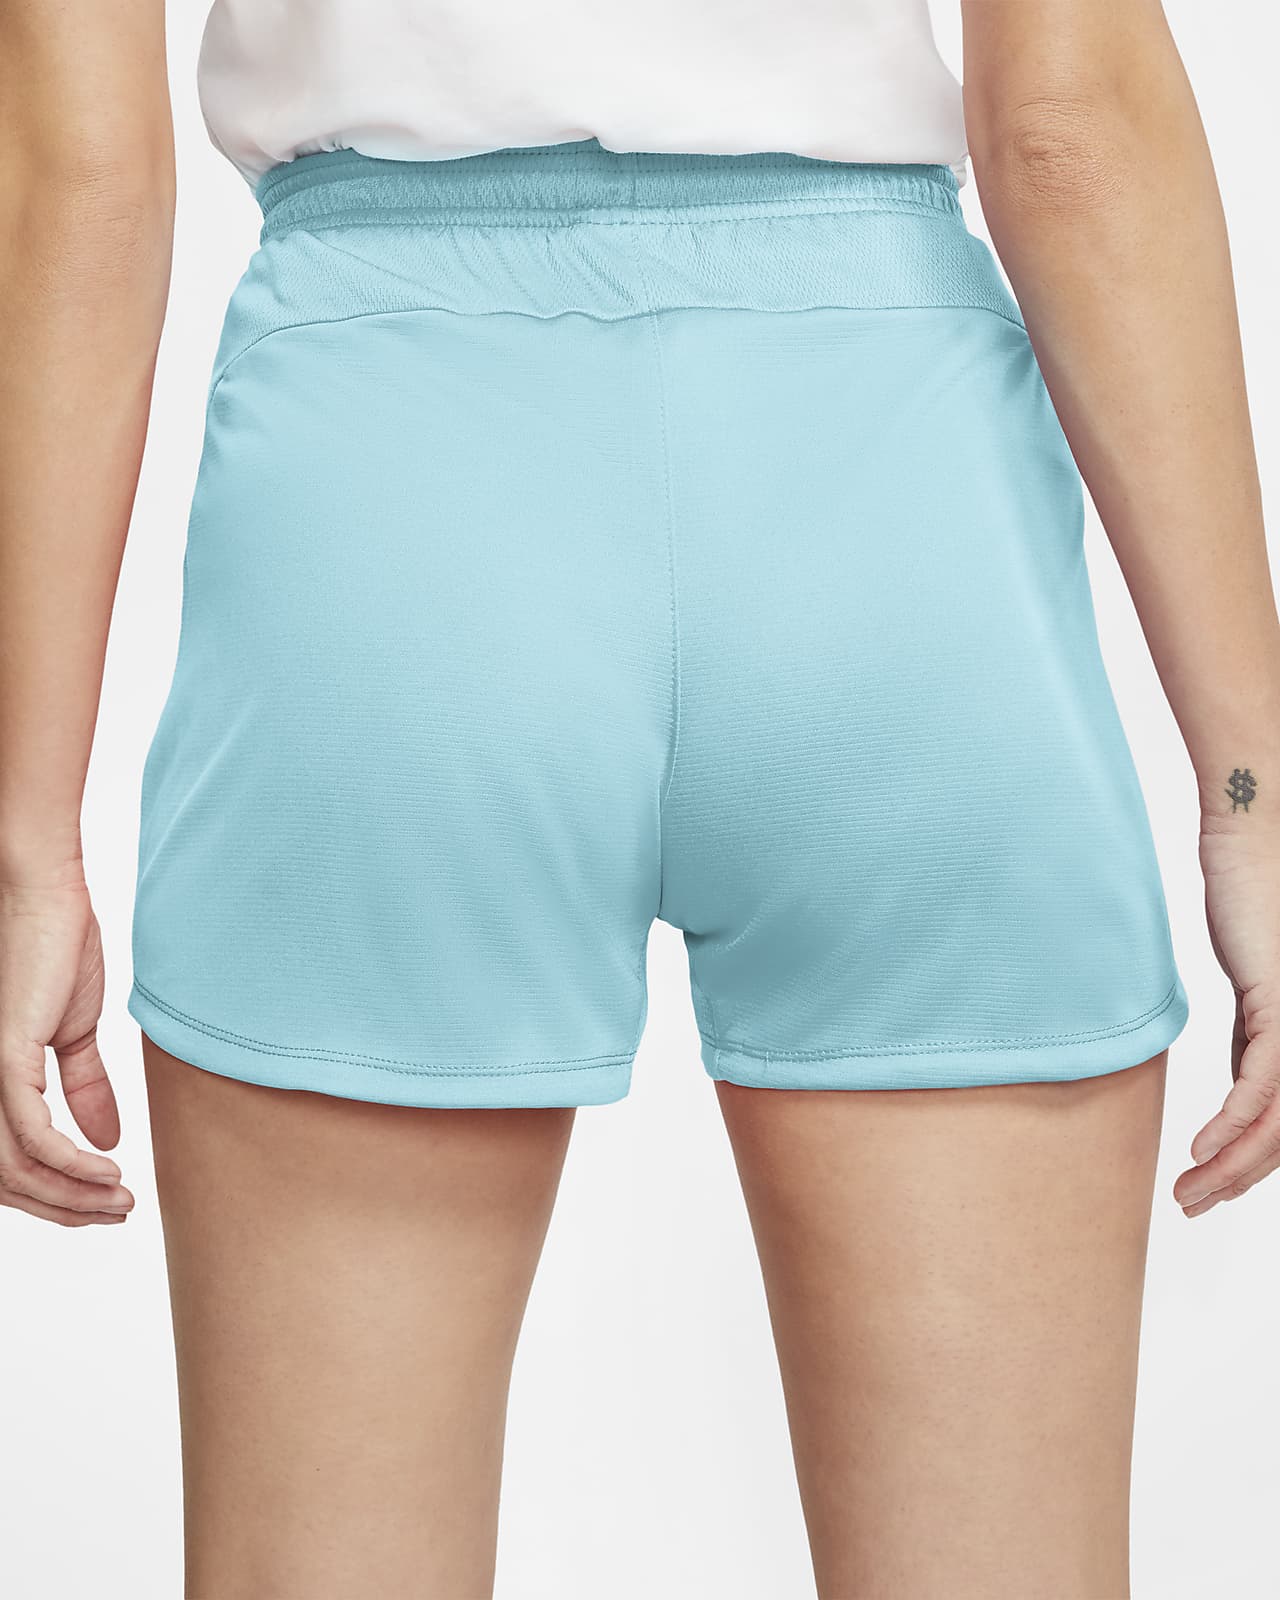 women's nike academy shorts